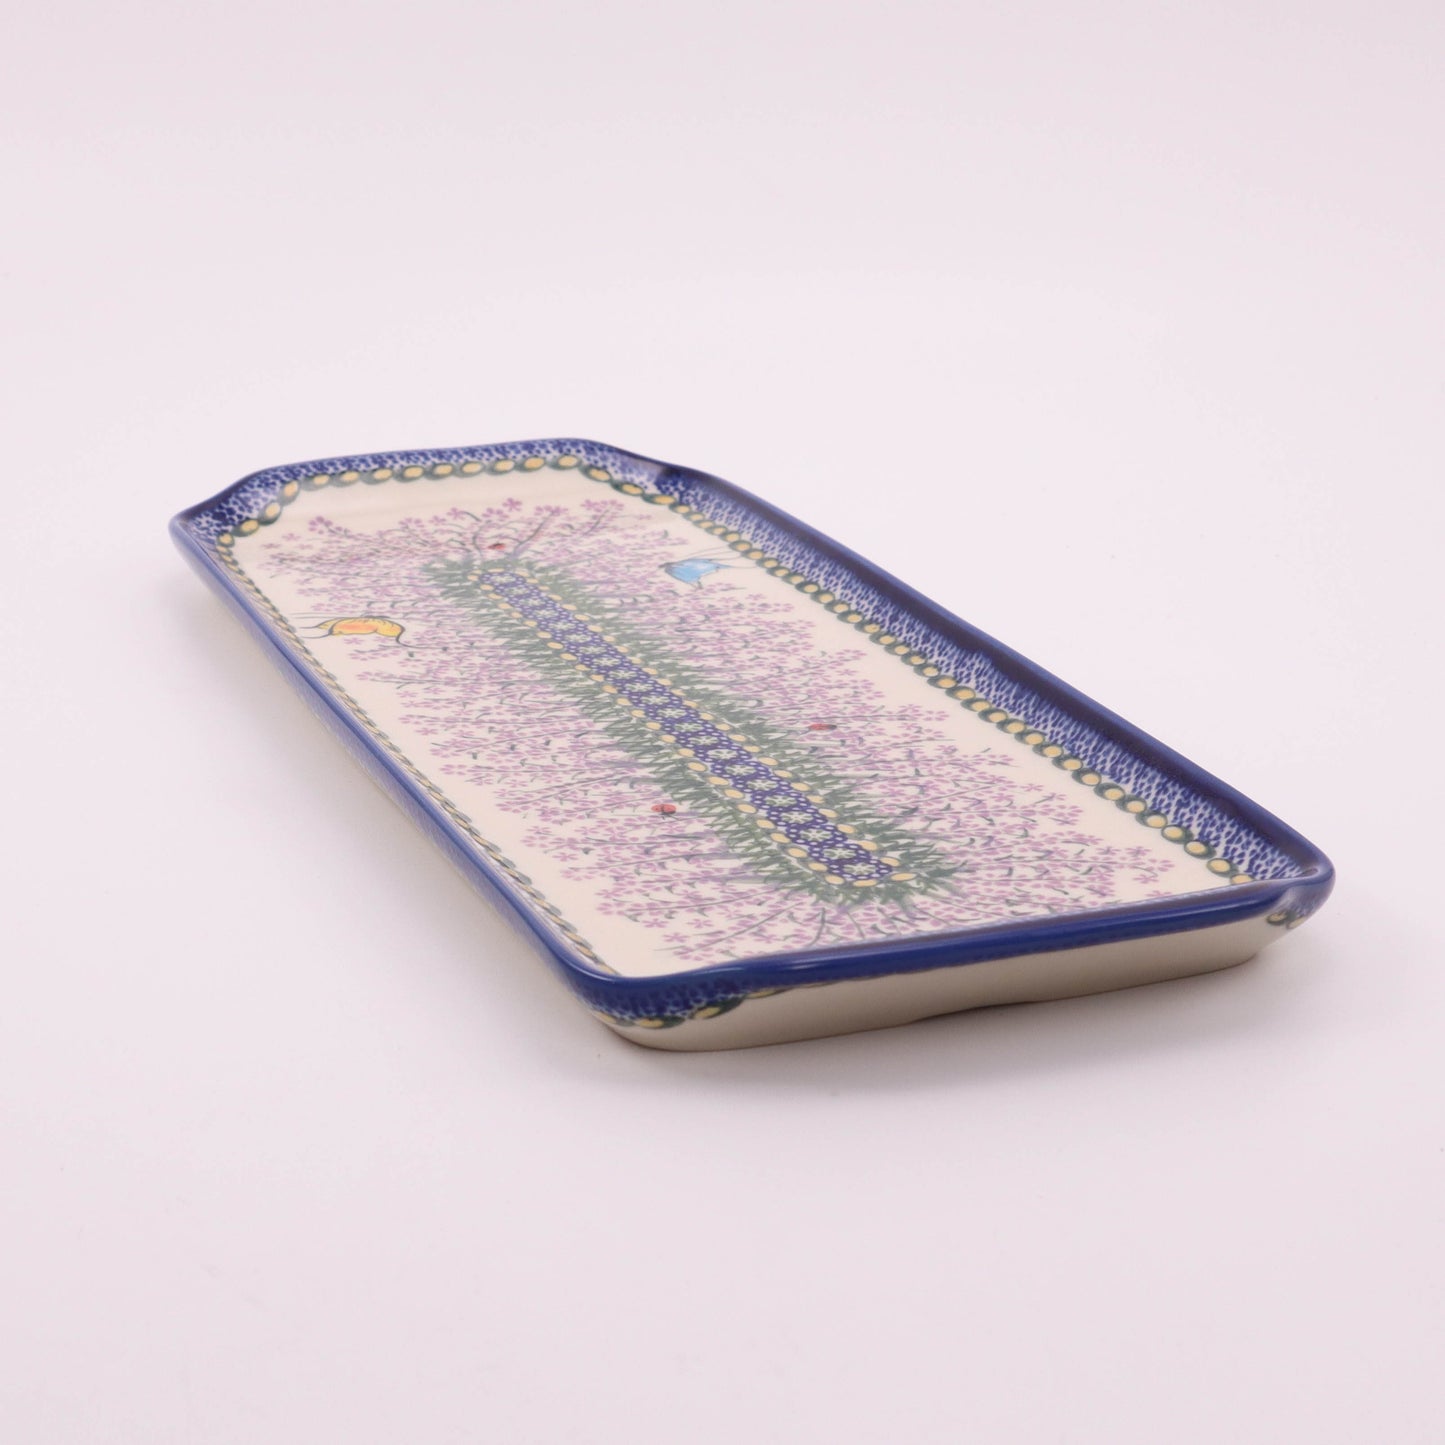 16"x6.5" Rectangular Serving Tray. Pattern: Lavender Fields